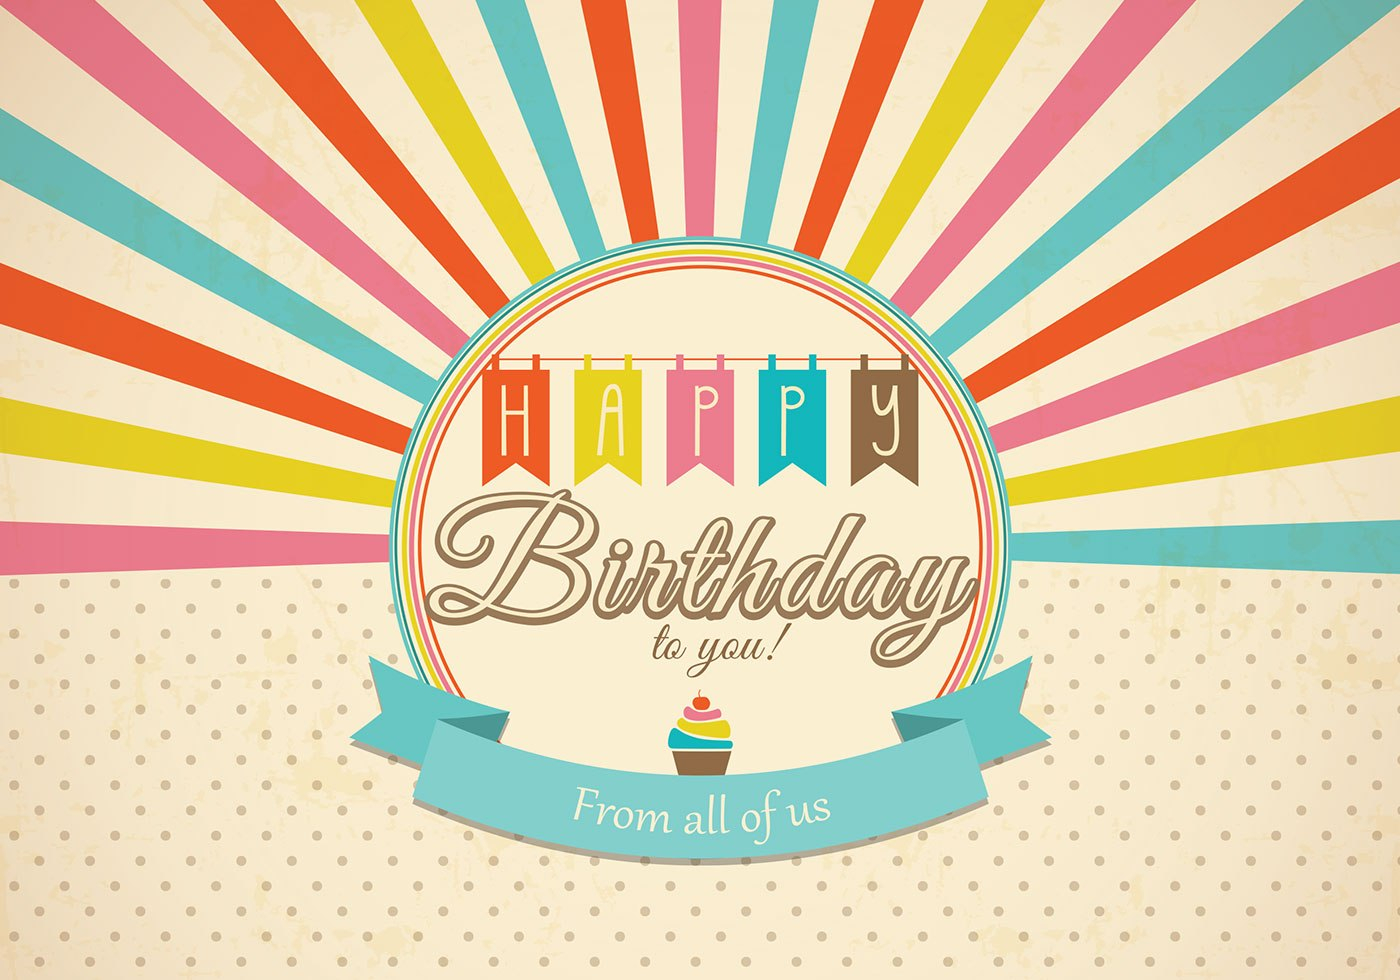 Retro Happy Birthday Card Psd  Free Photoshop Brushes At Brusheezy regarding Photoshop Birthday Card Template Free